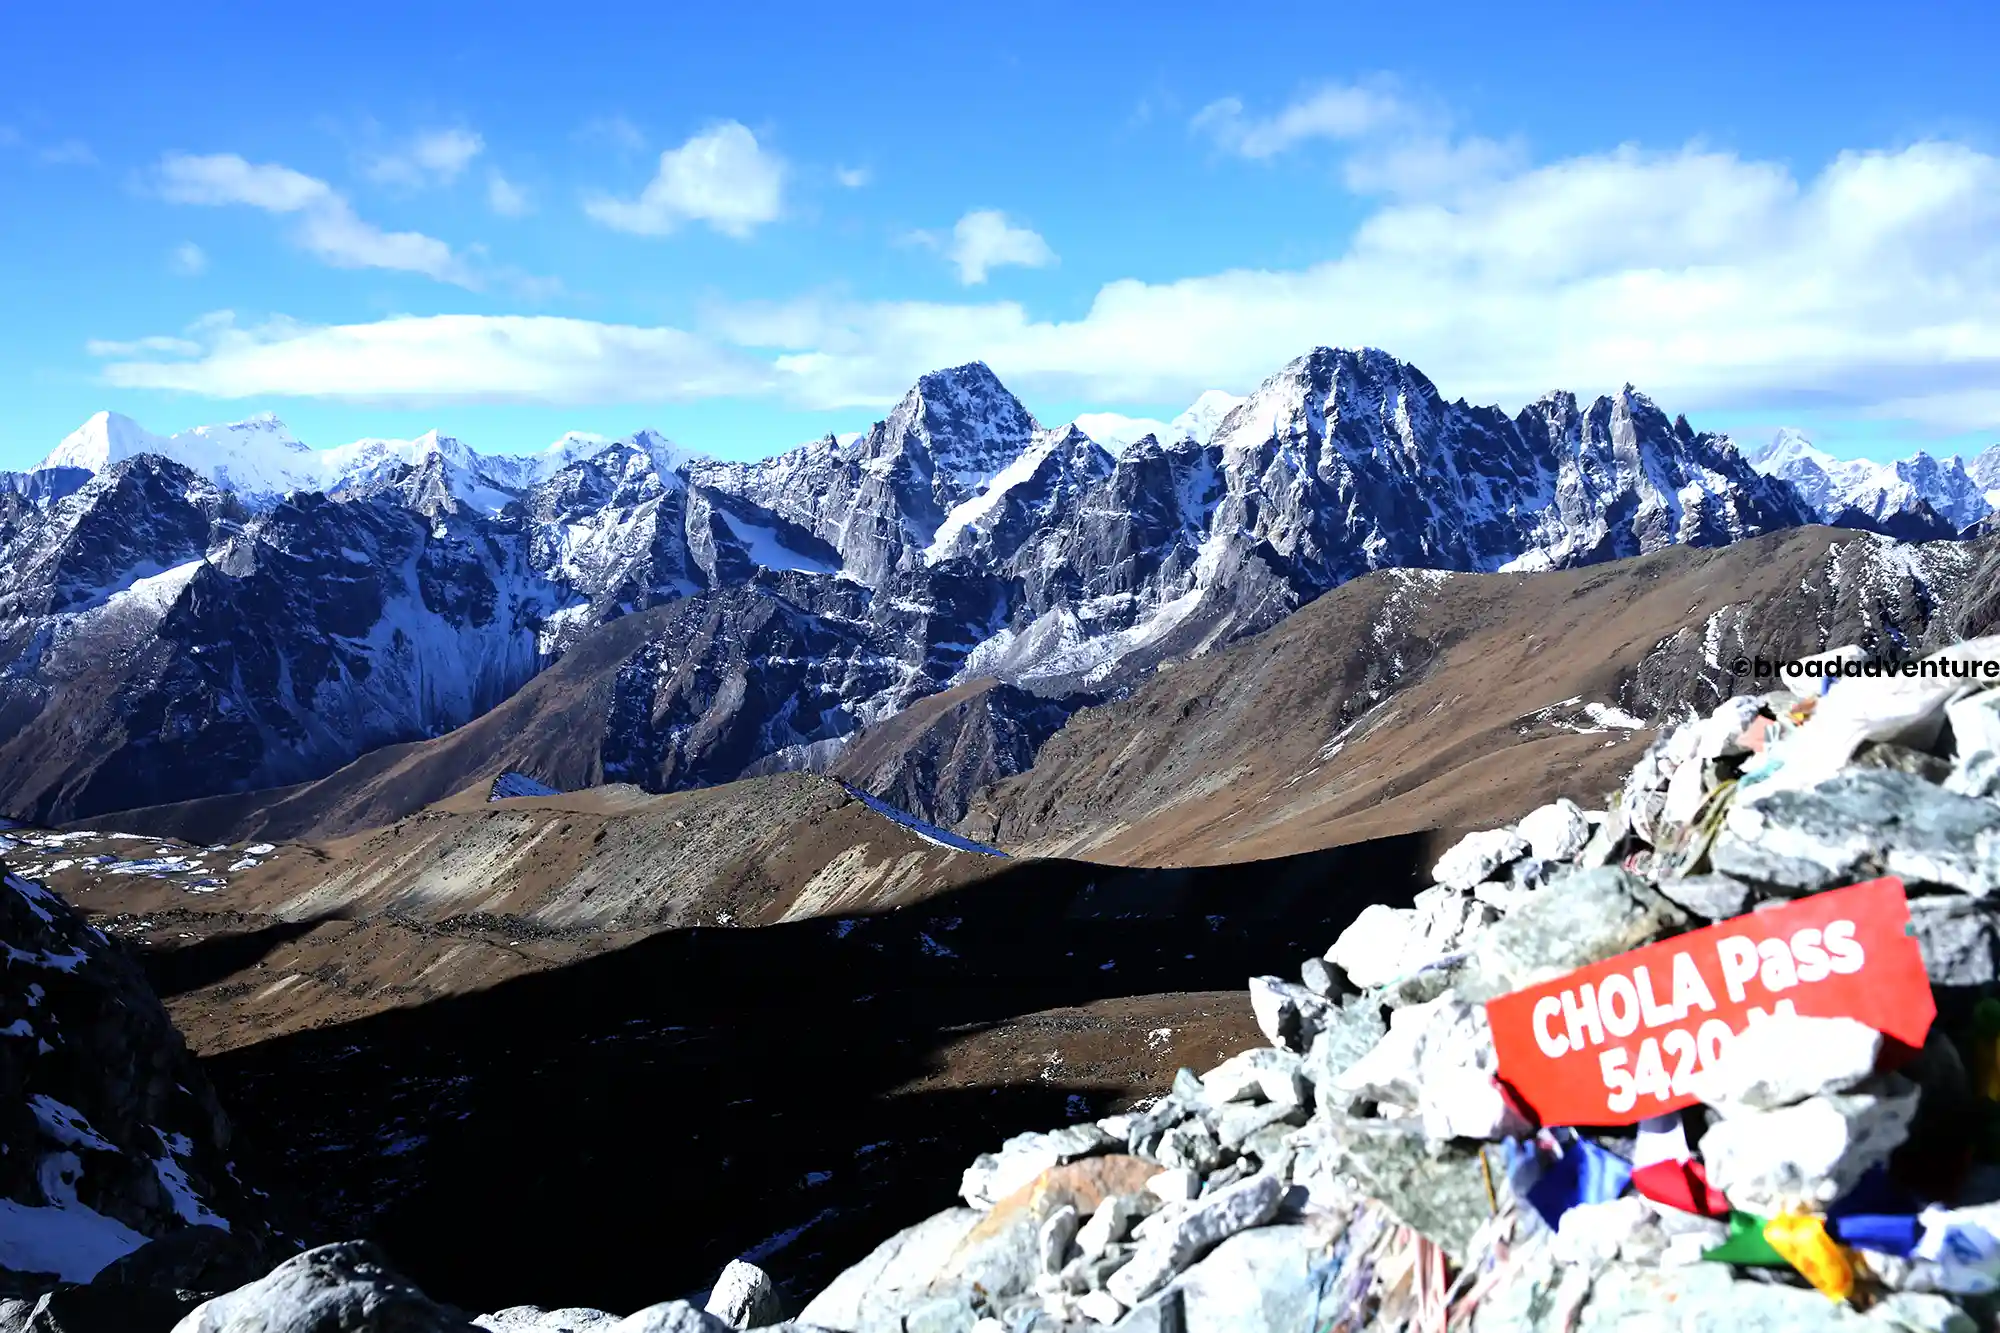 Chola Pass 5420M: A Trekker’s Ultimate Himalayan Adventure